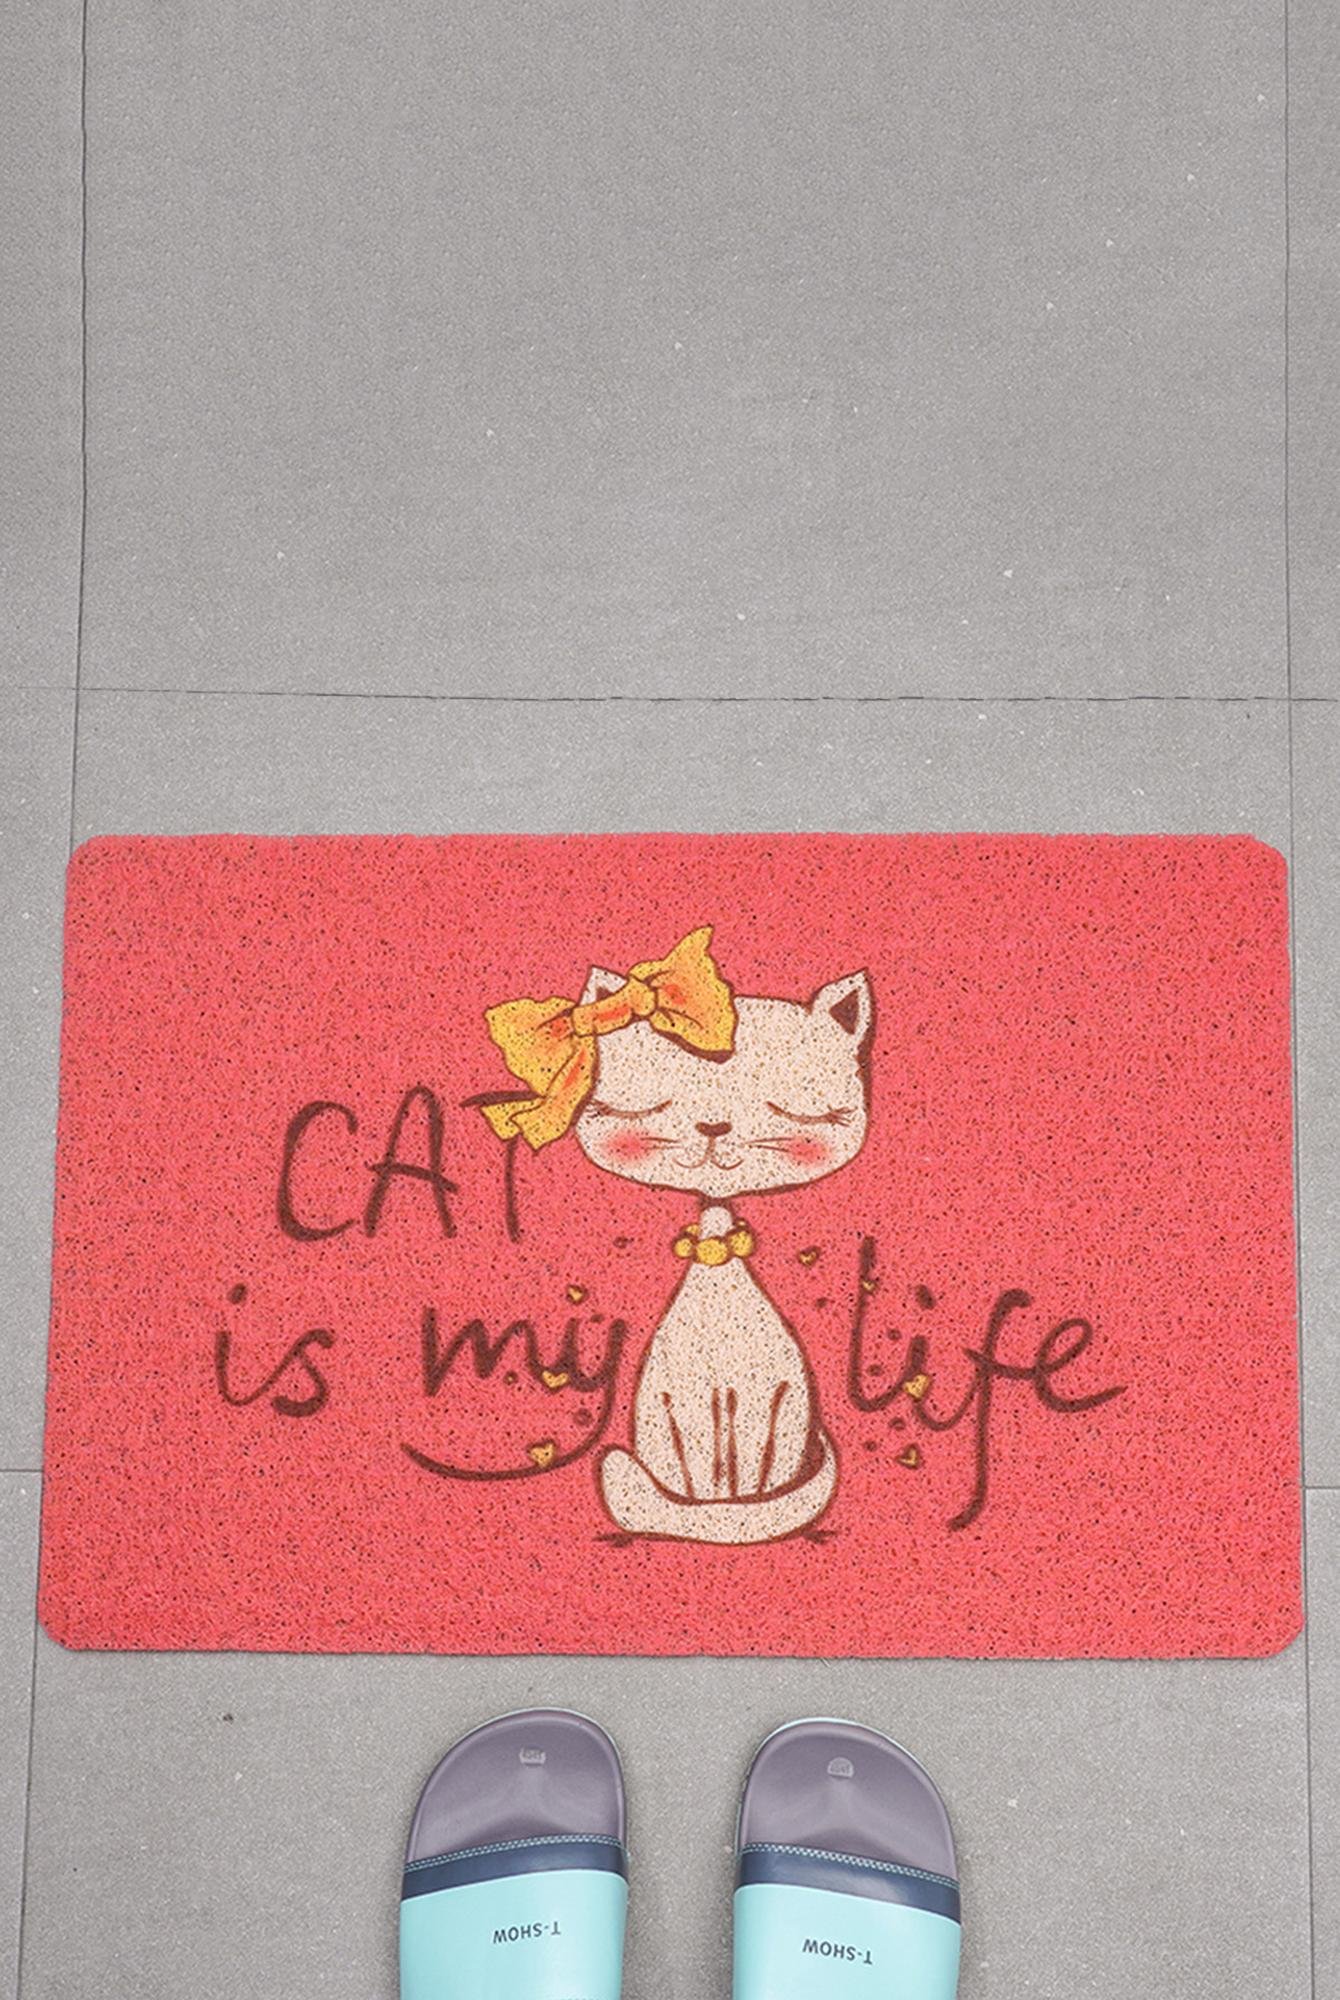  Yoyoso Dekoratif Sloganlı Kauçuk Kapıönü Paspas Cats My Life 40 x 60 cm